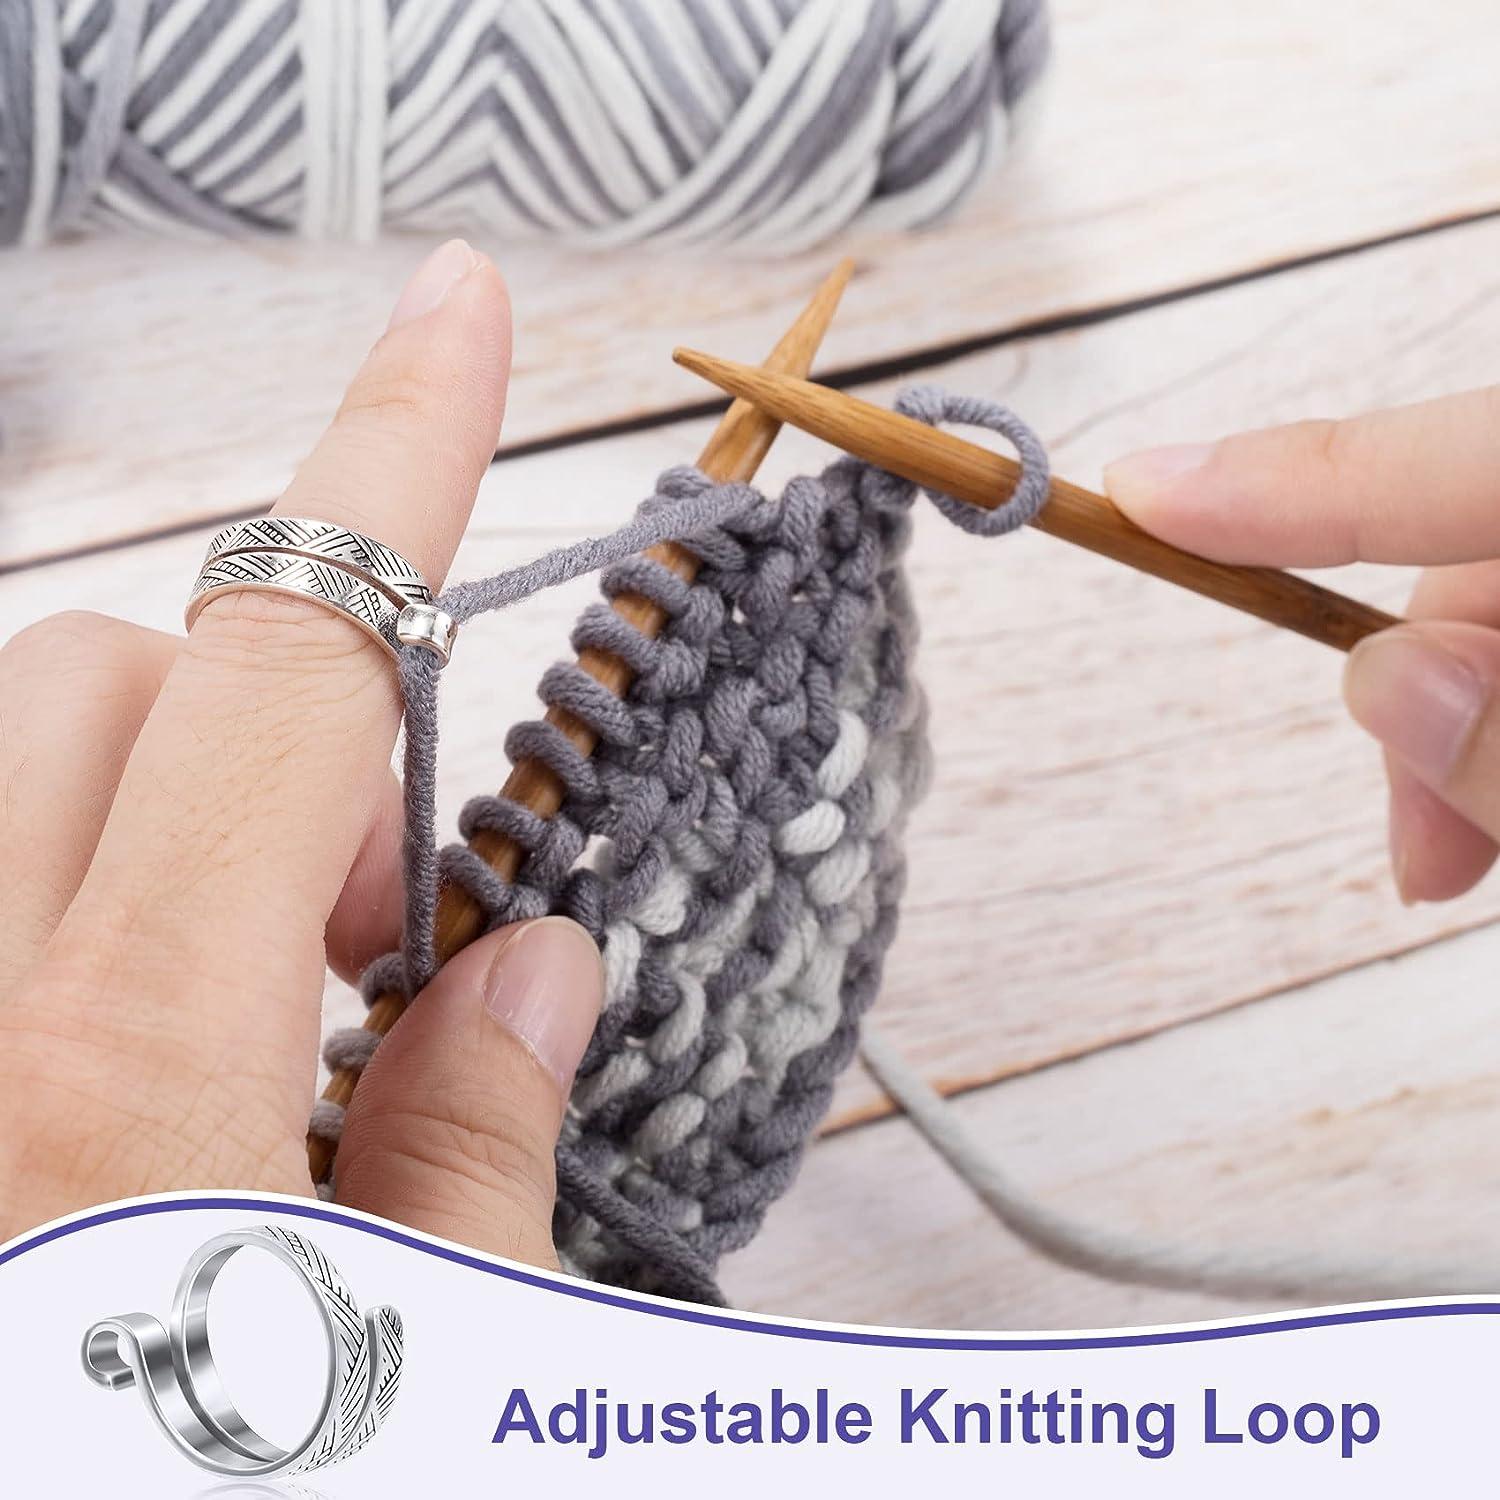 PAGOW 8 PCS Knitting Crochet Loop Ring Crochet Ring for Finger